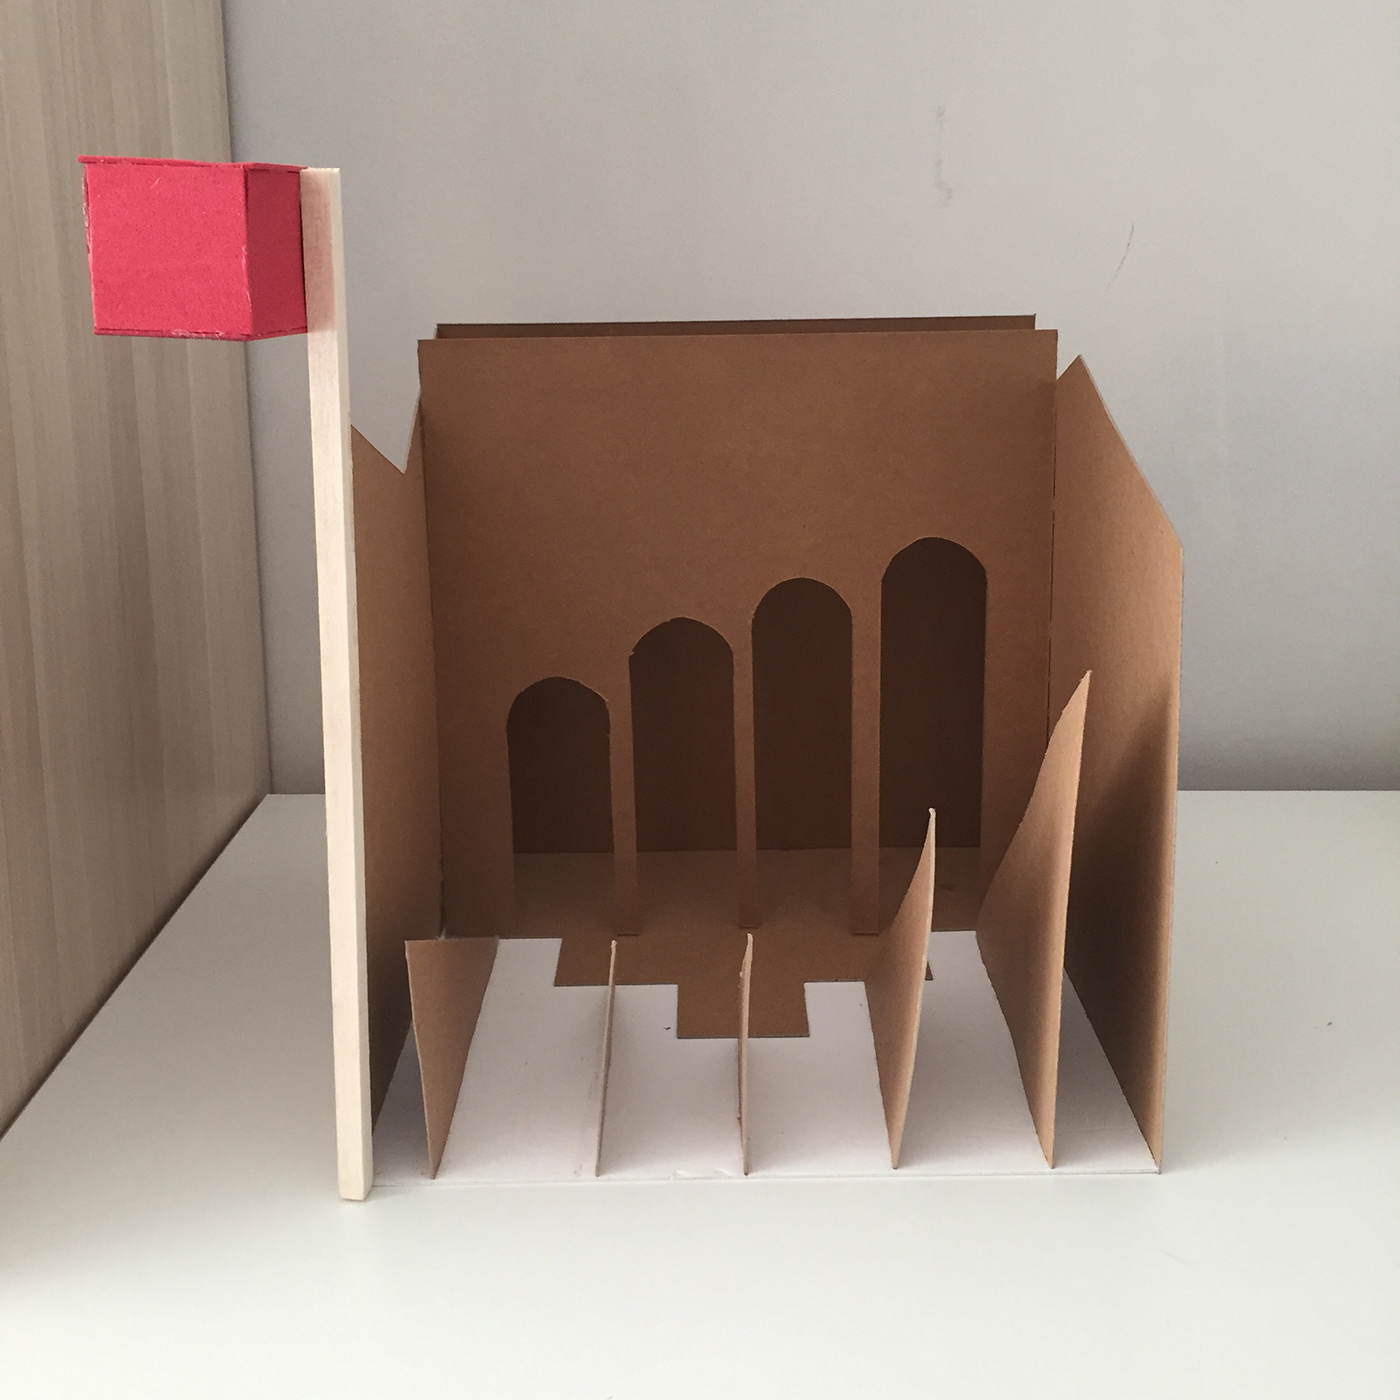 Robert Venturi Cube Design denise scott brown postmodernism postmodern art vanna venturi house